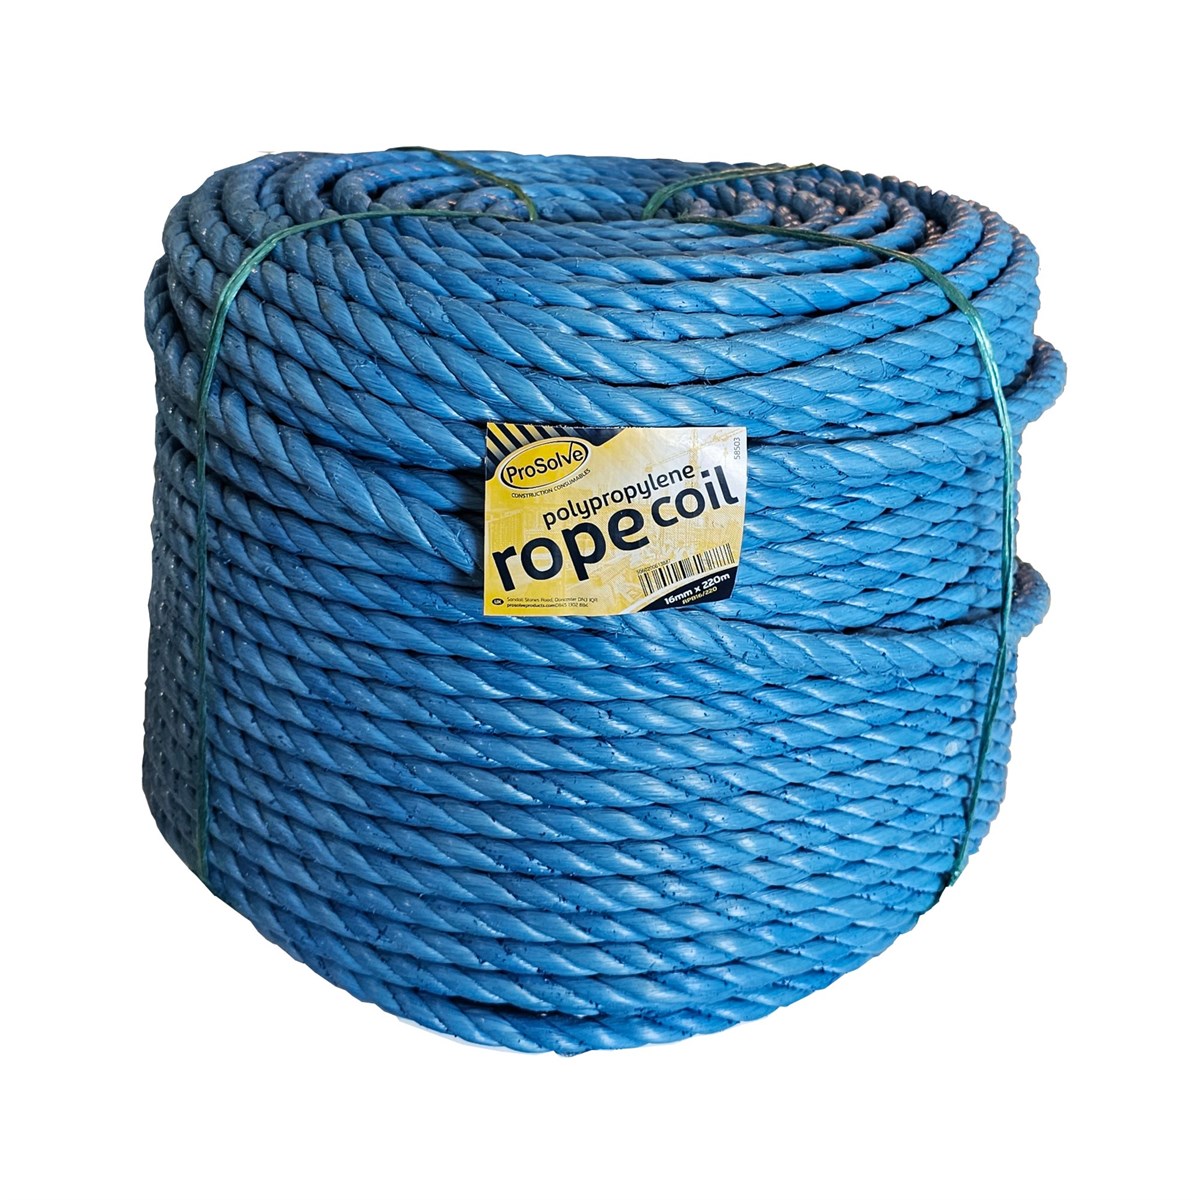 Rope & Tarpaulin